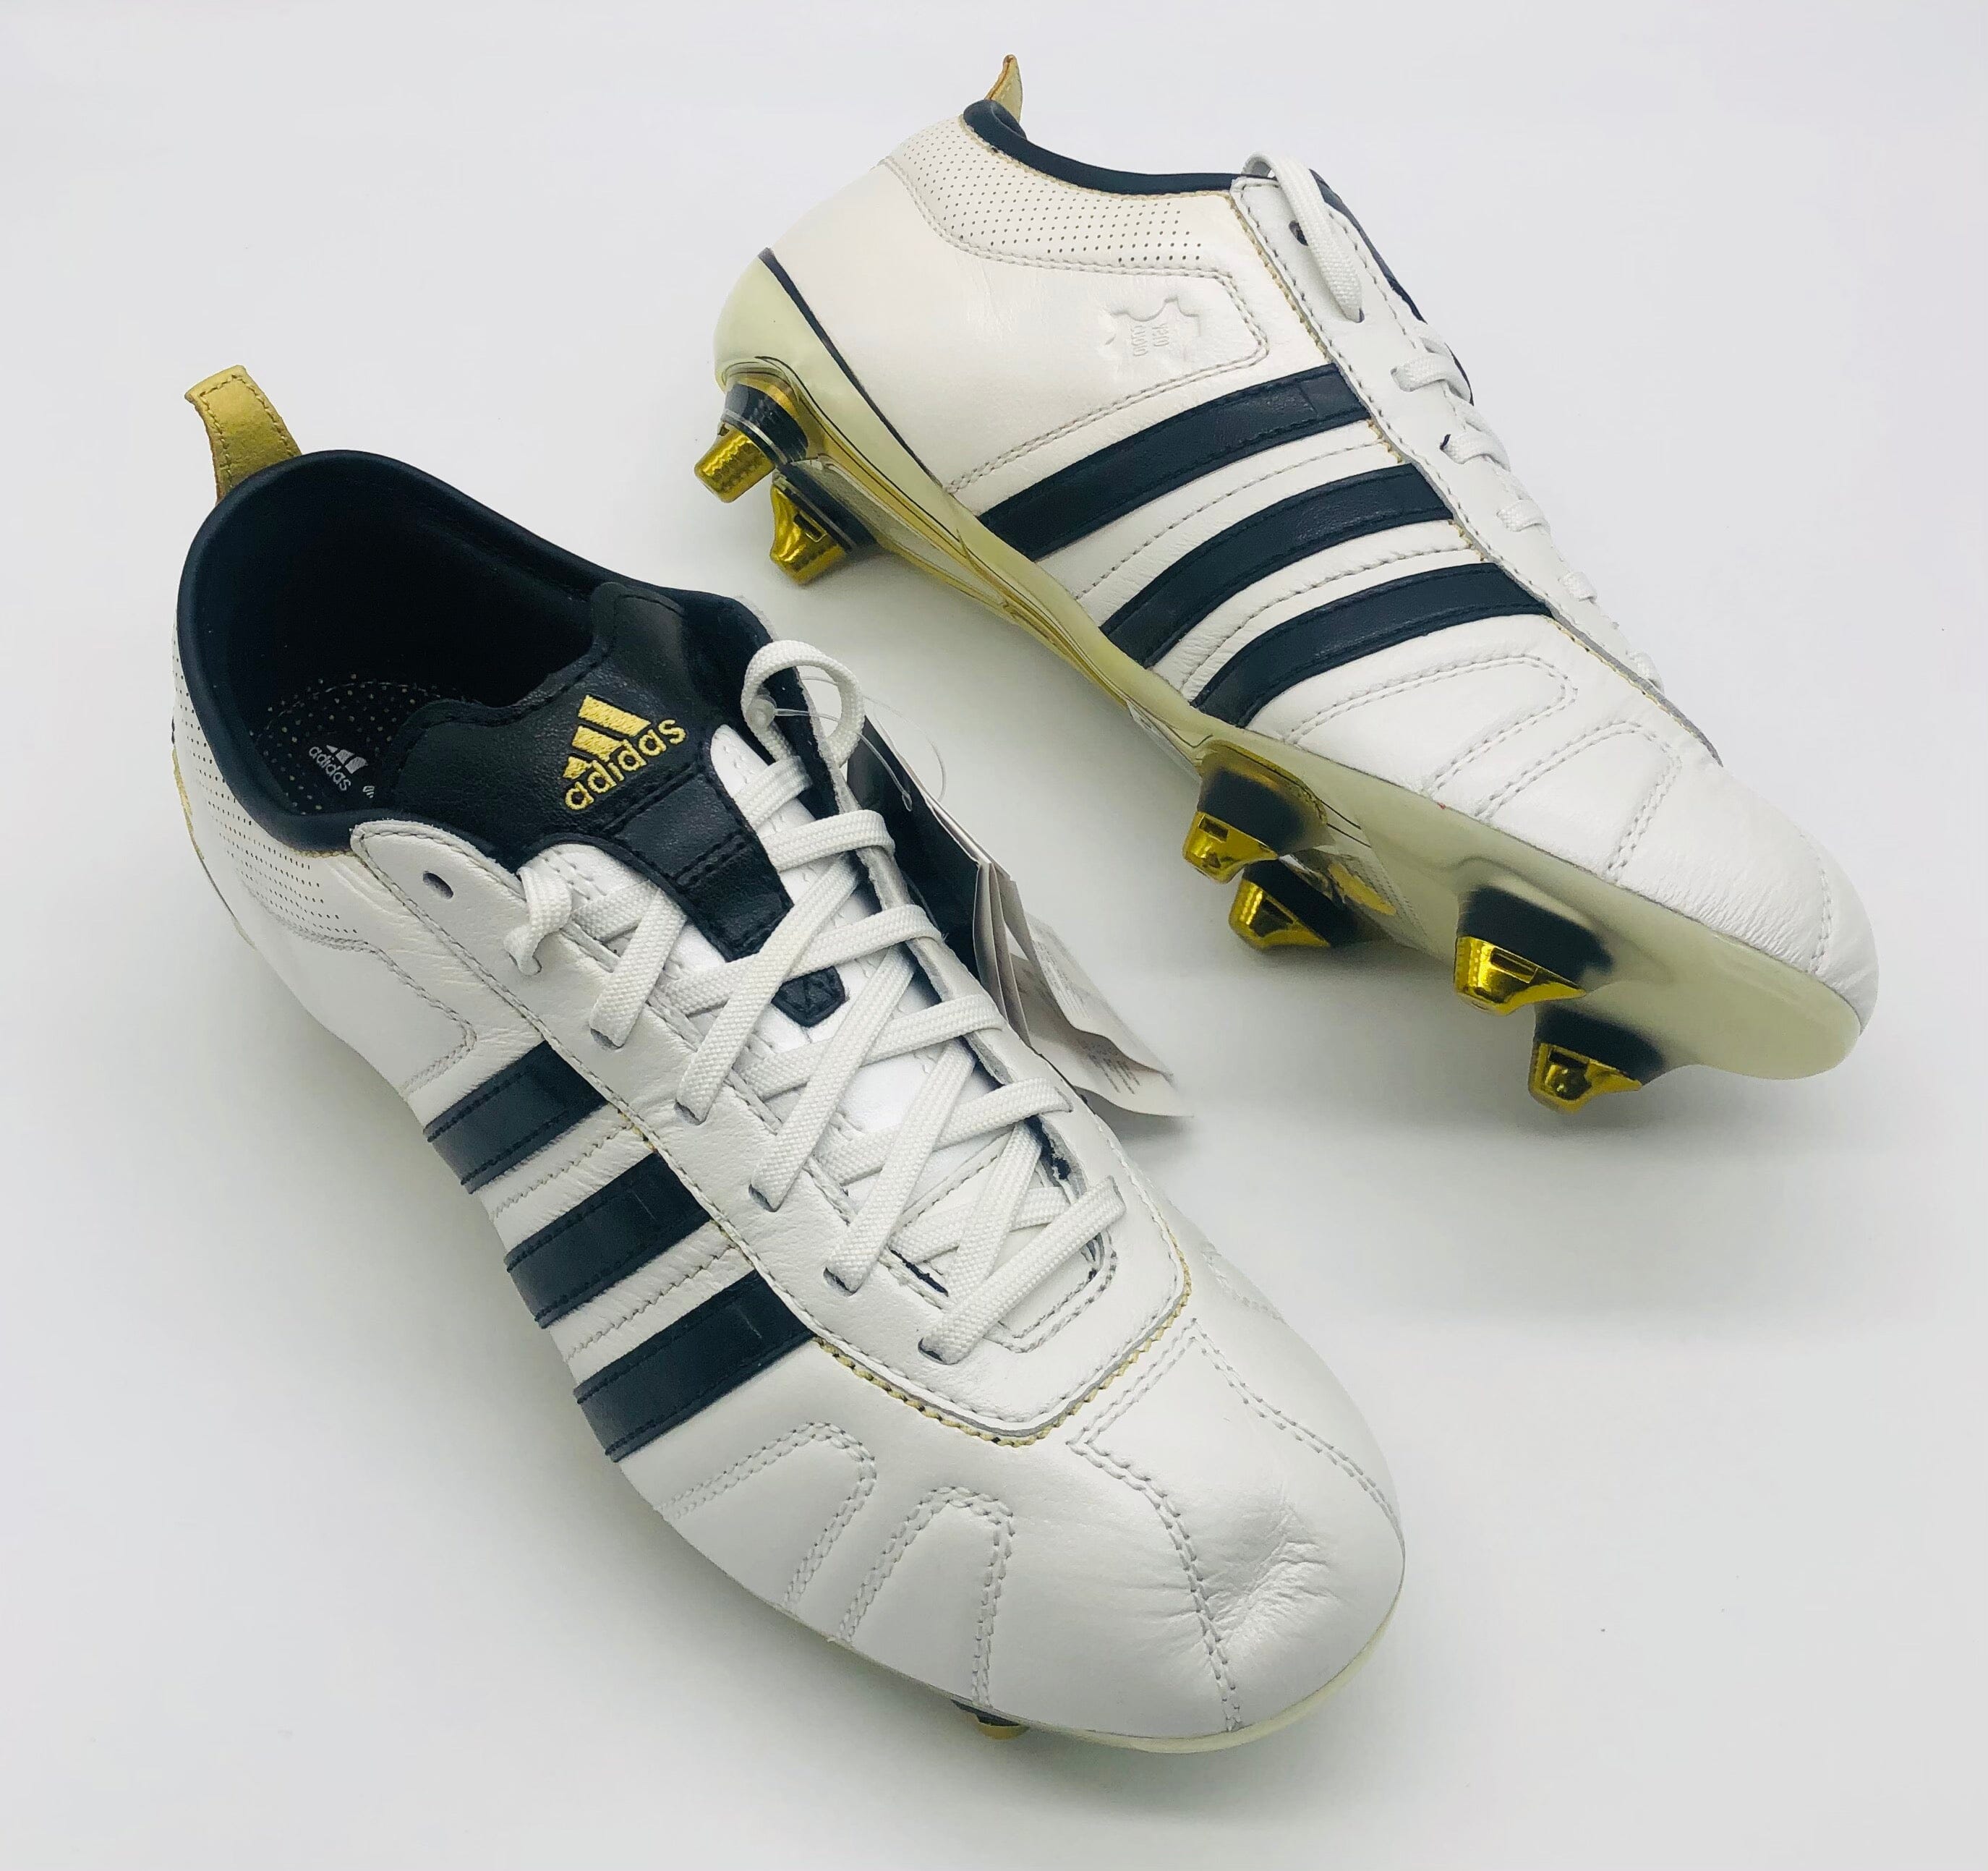 Escritor Imperio Inca encender un fuego Adidas Adipure IV TRX SG – Classic Football Boots Ltd